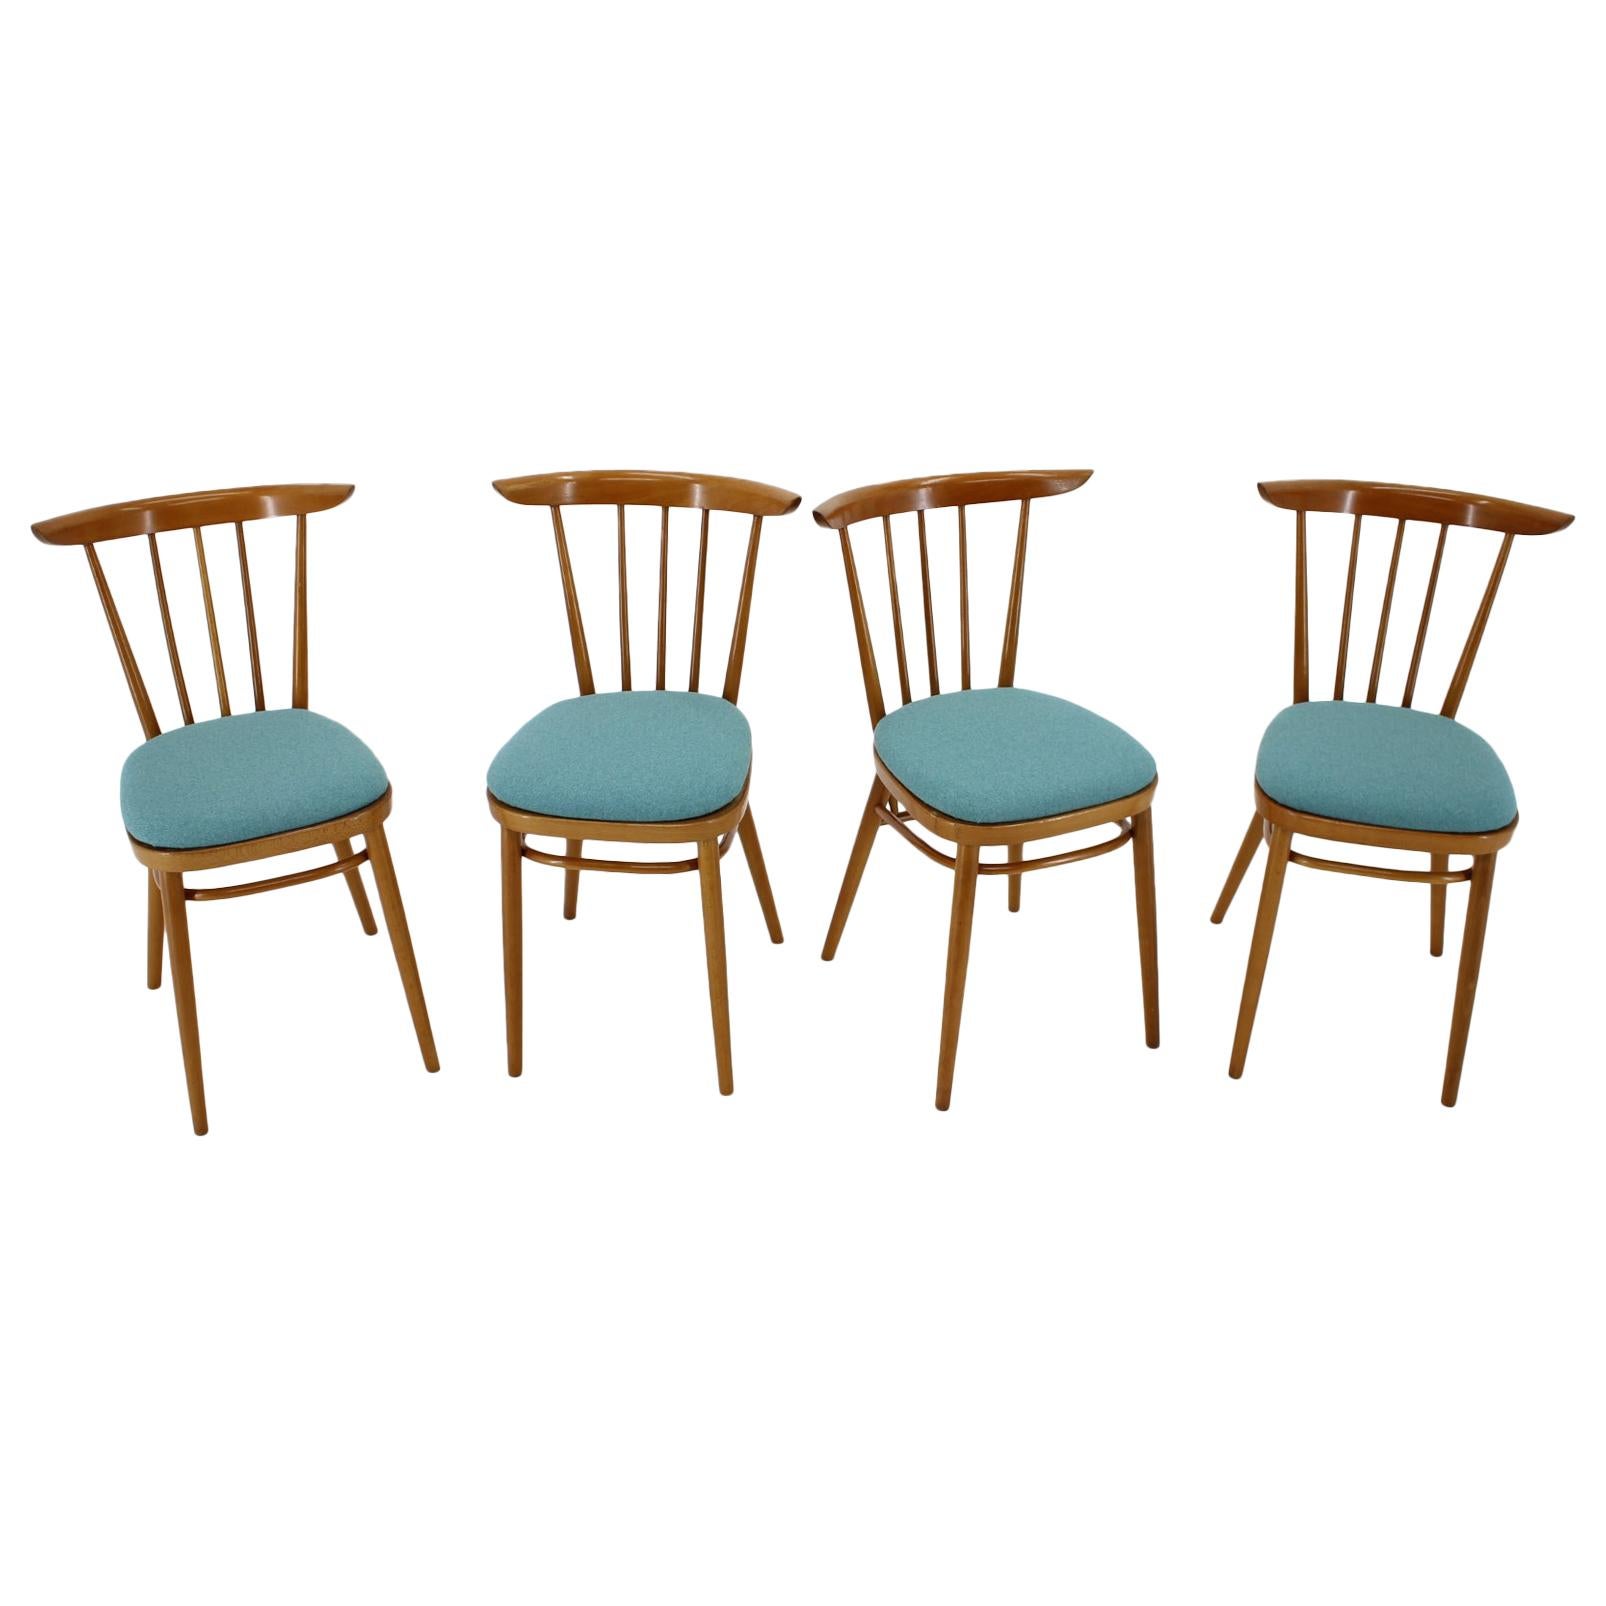 1960s Set of Four Dining Chairs by Tatra, Czechoslovakia